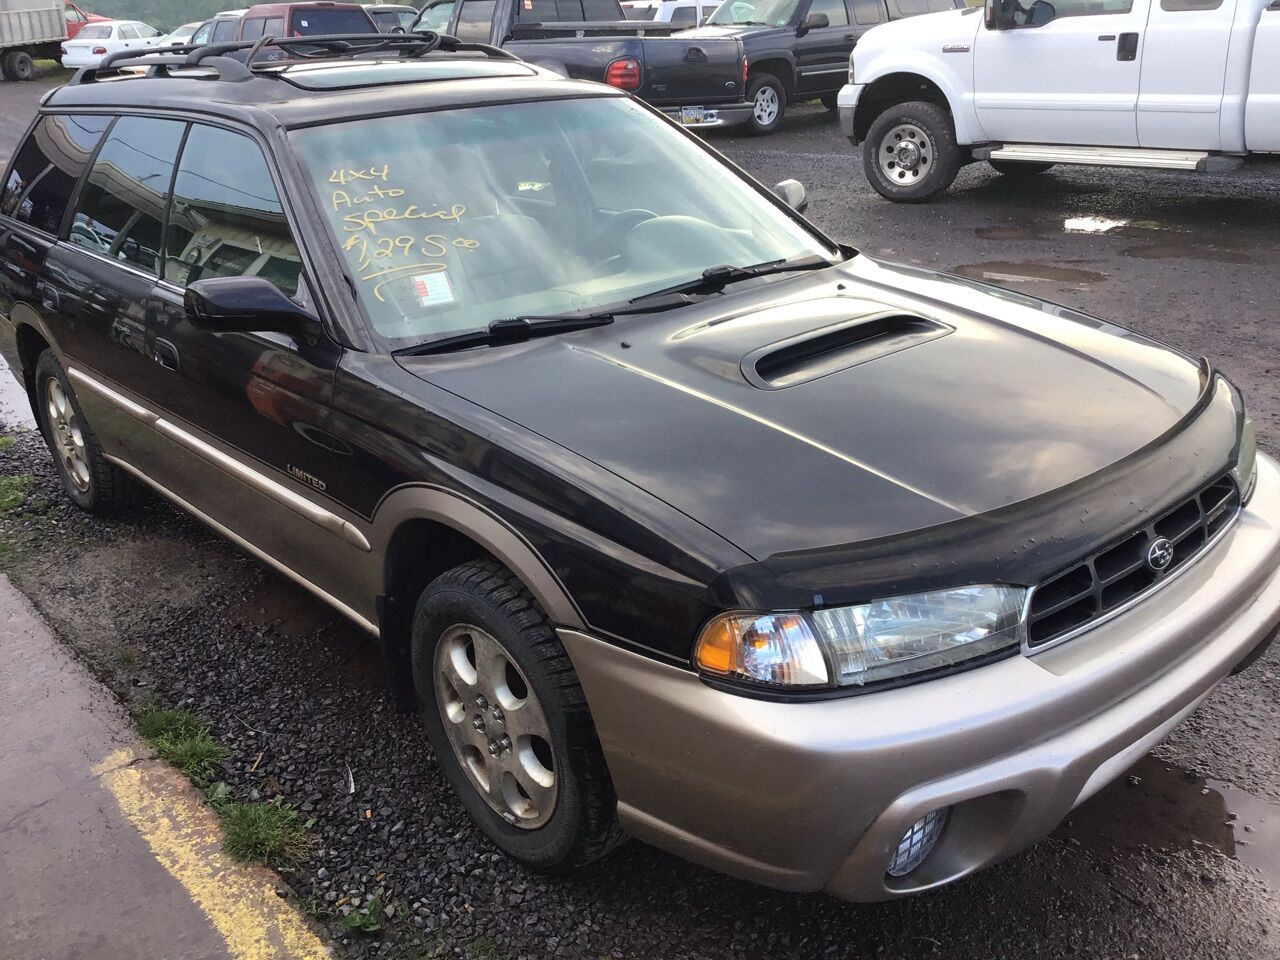 1999 Subaru Legacy For Sale - Carsforsale.com®